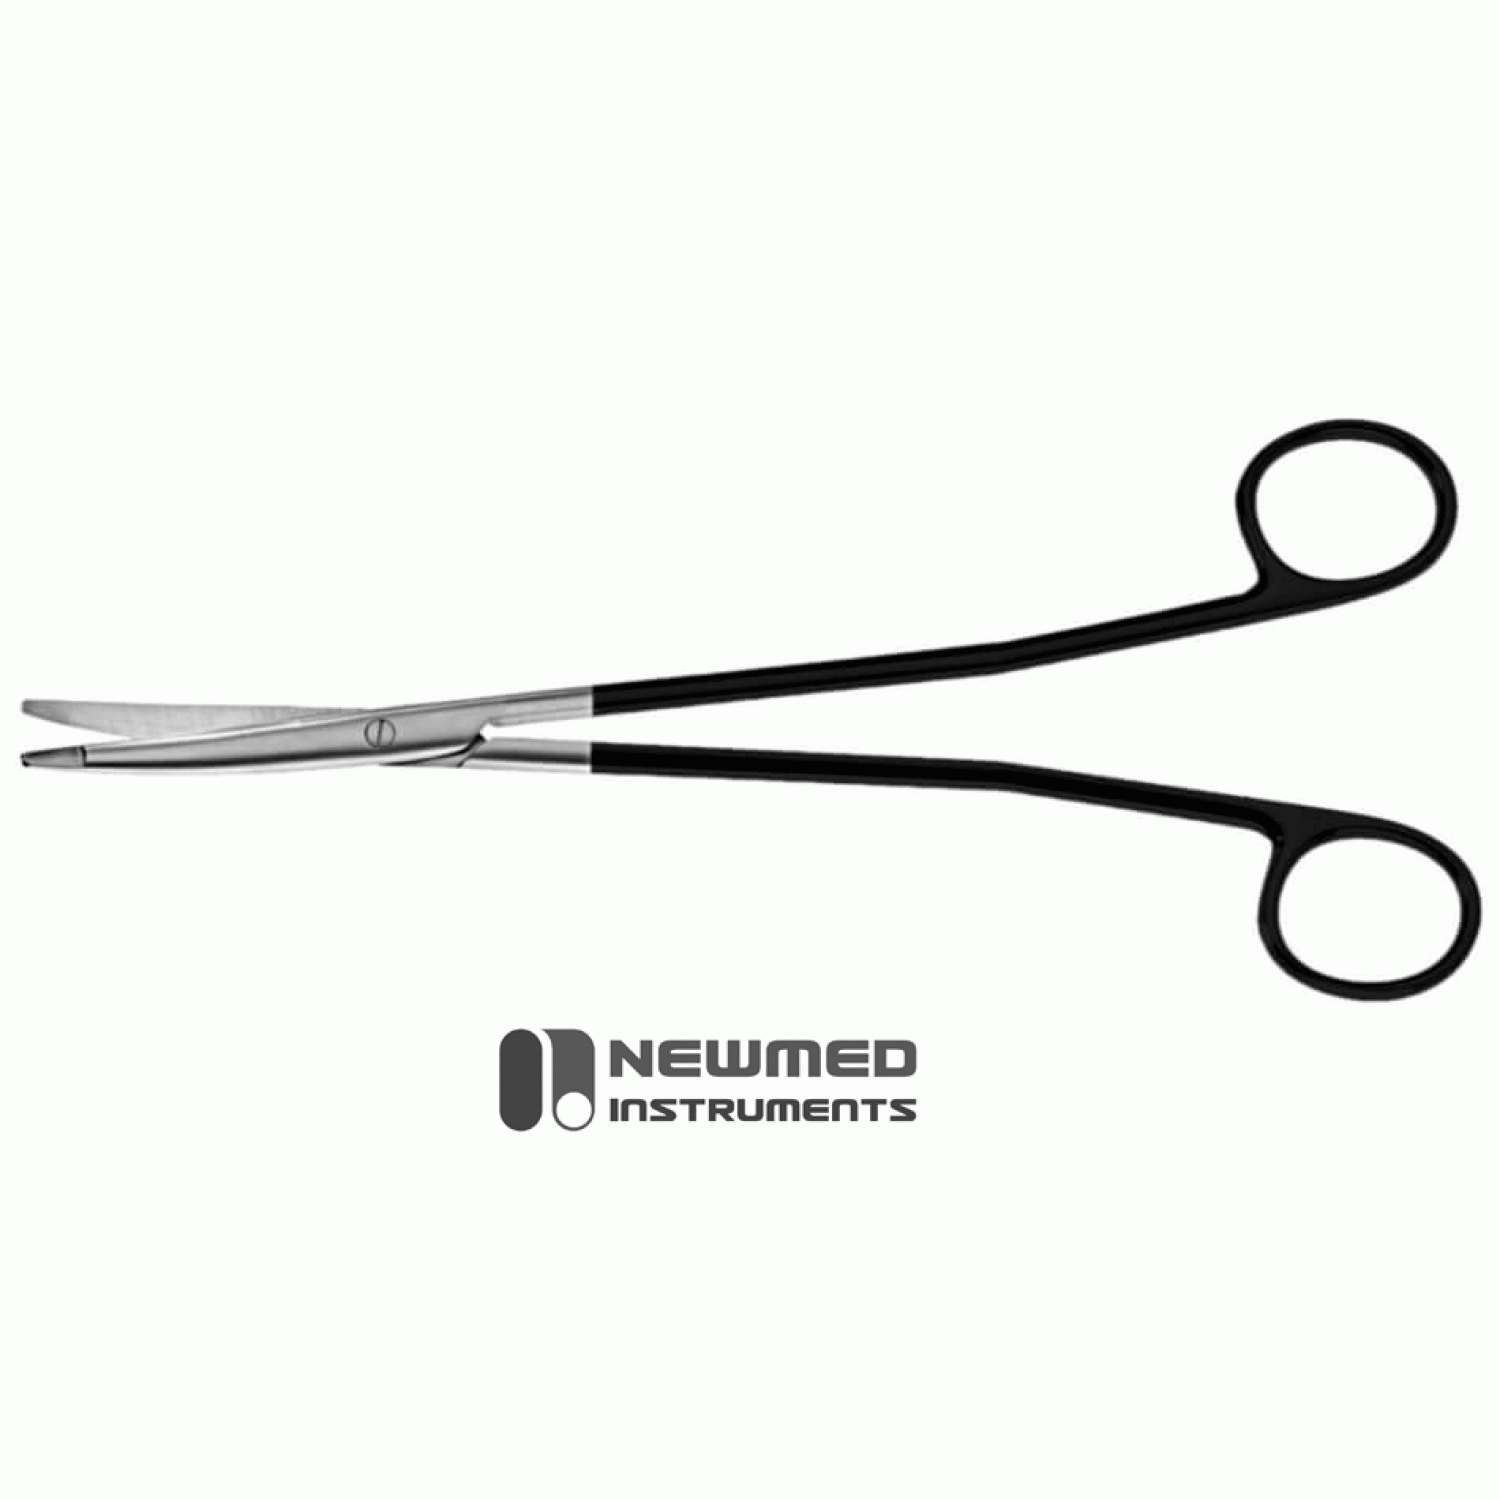 Deli Metal Scissors Multifunction Kawaii Curved Cutting Larger